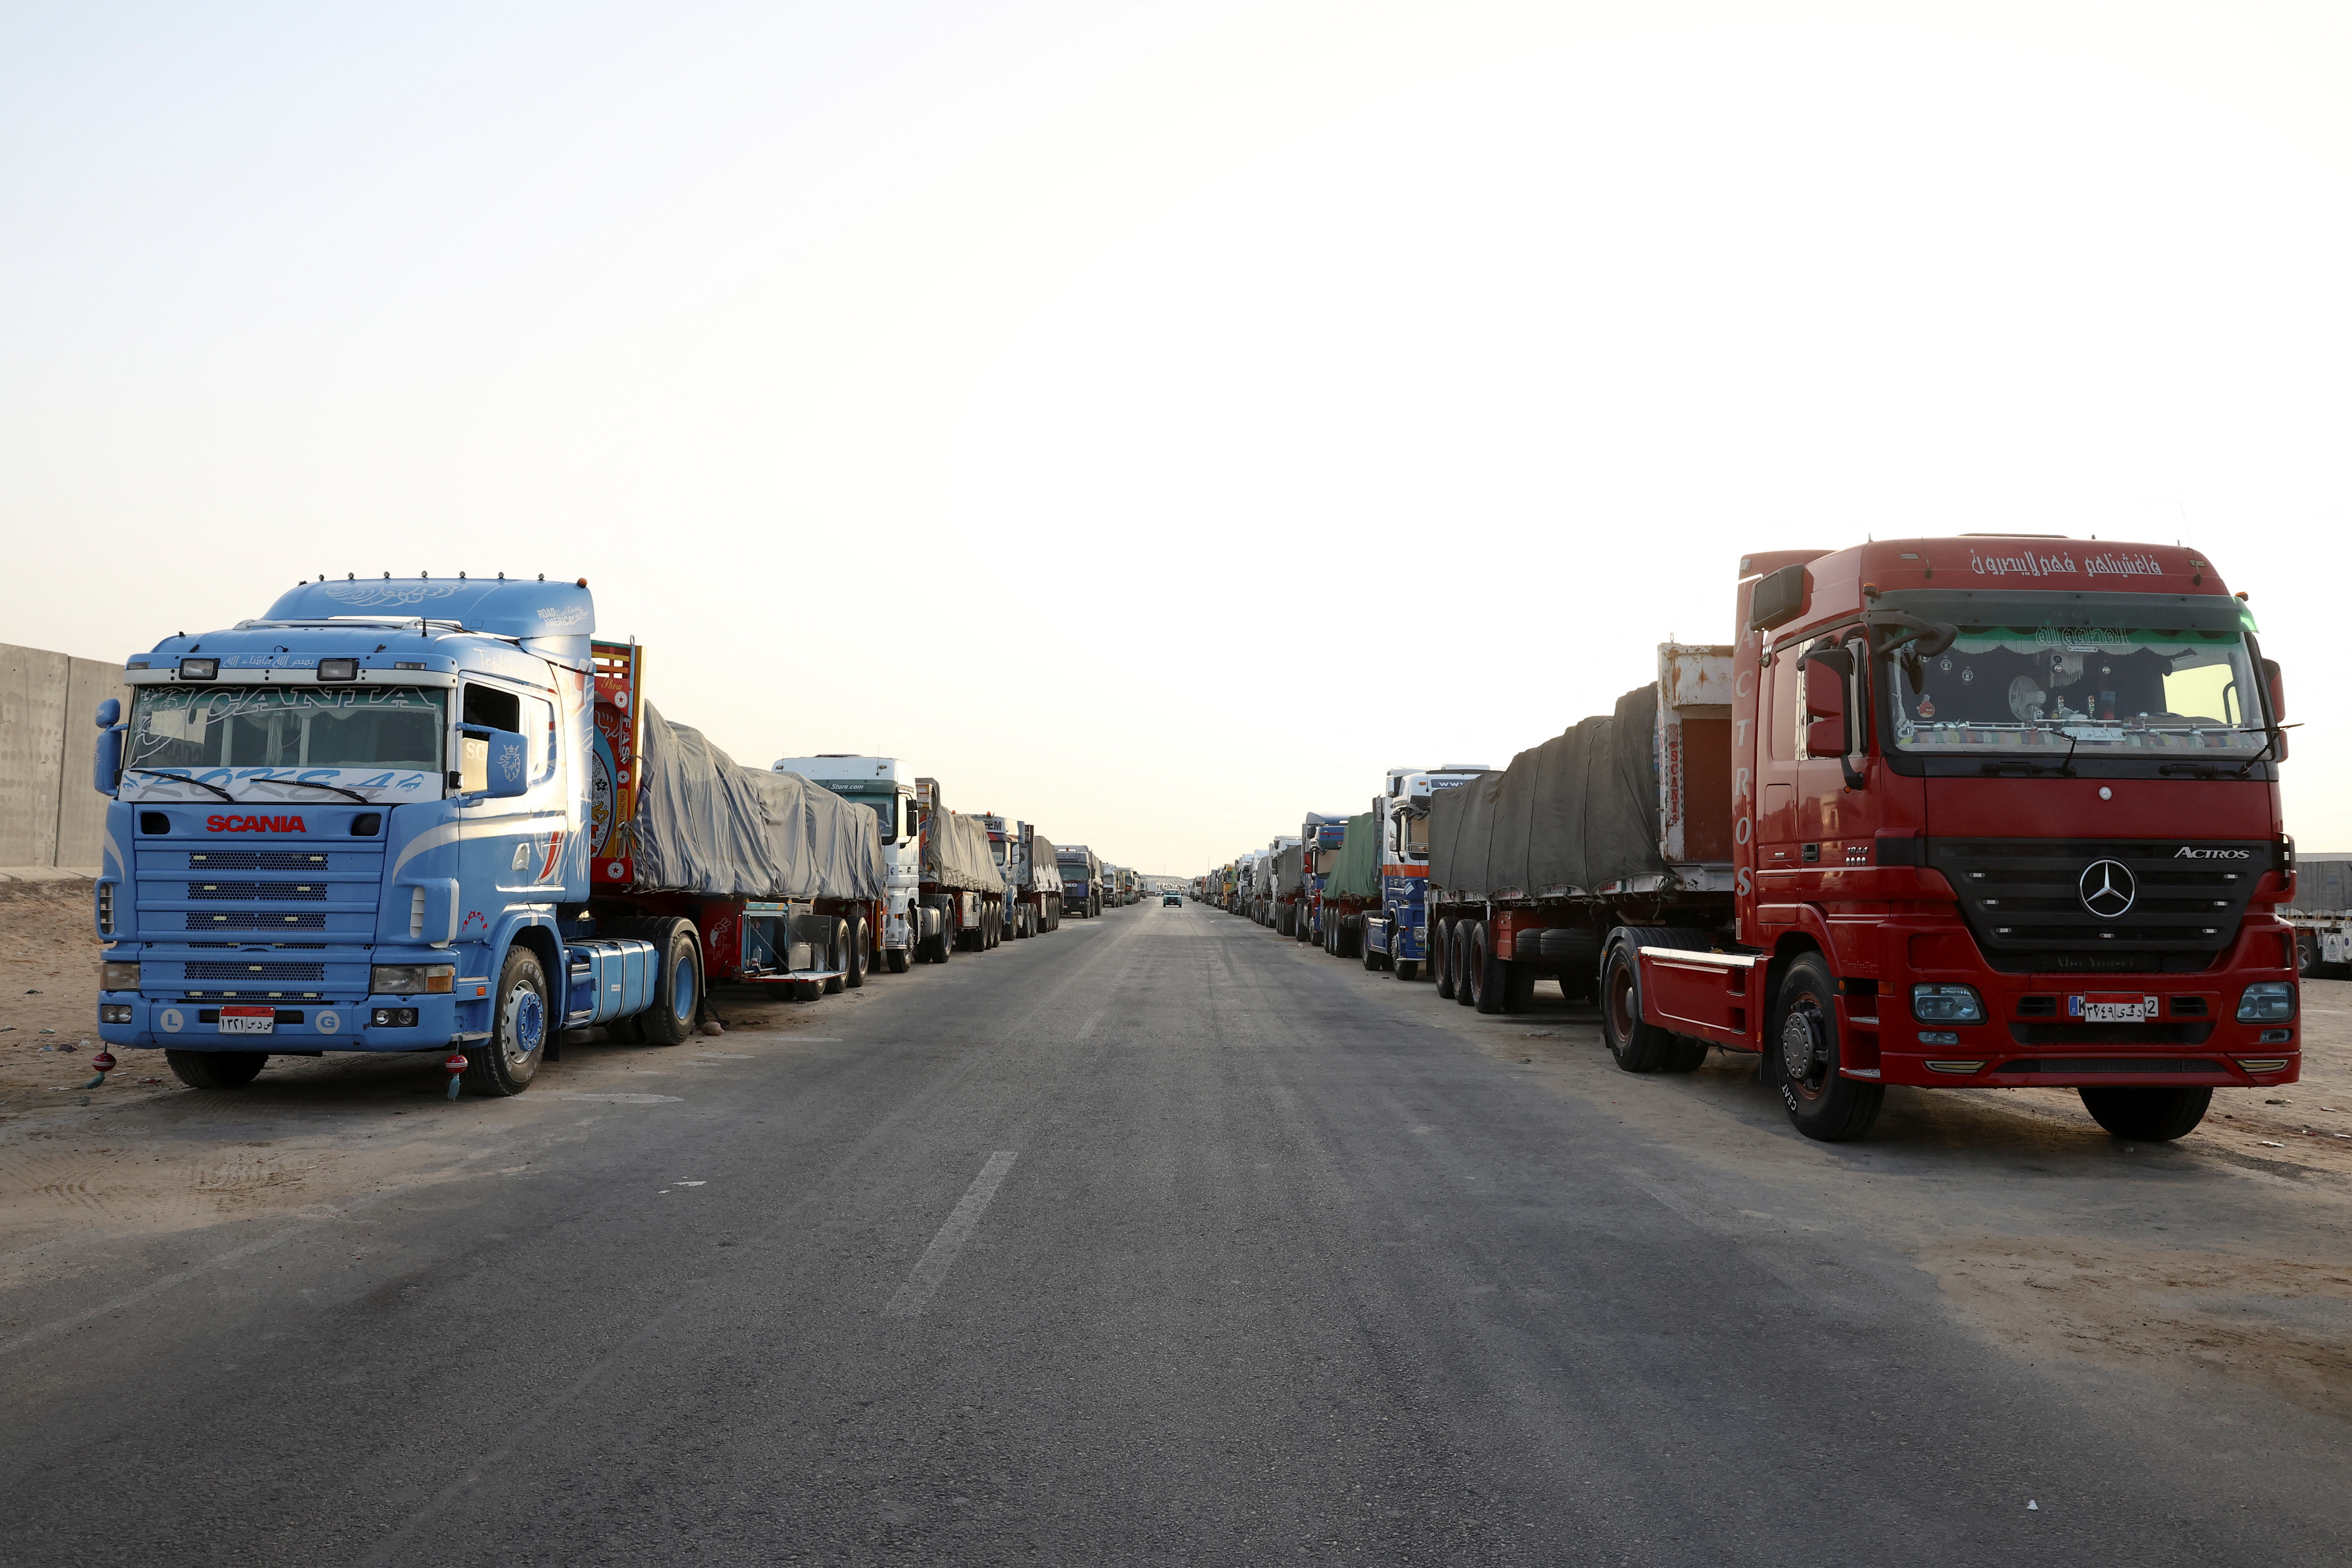 Stranded aid trucks in Egypt deepen Gaza’s humanitarian crisis